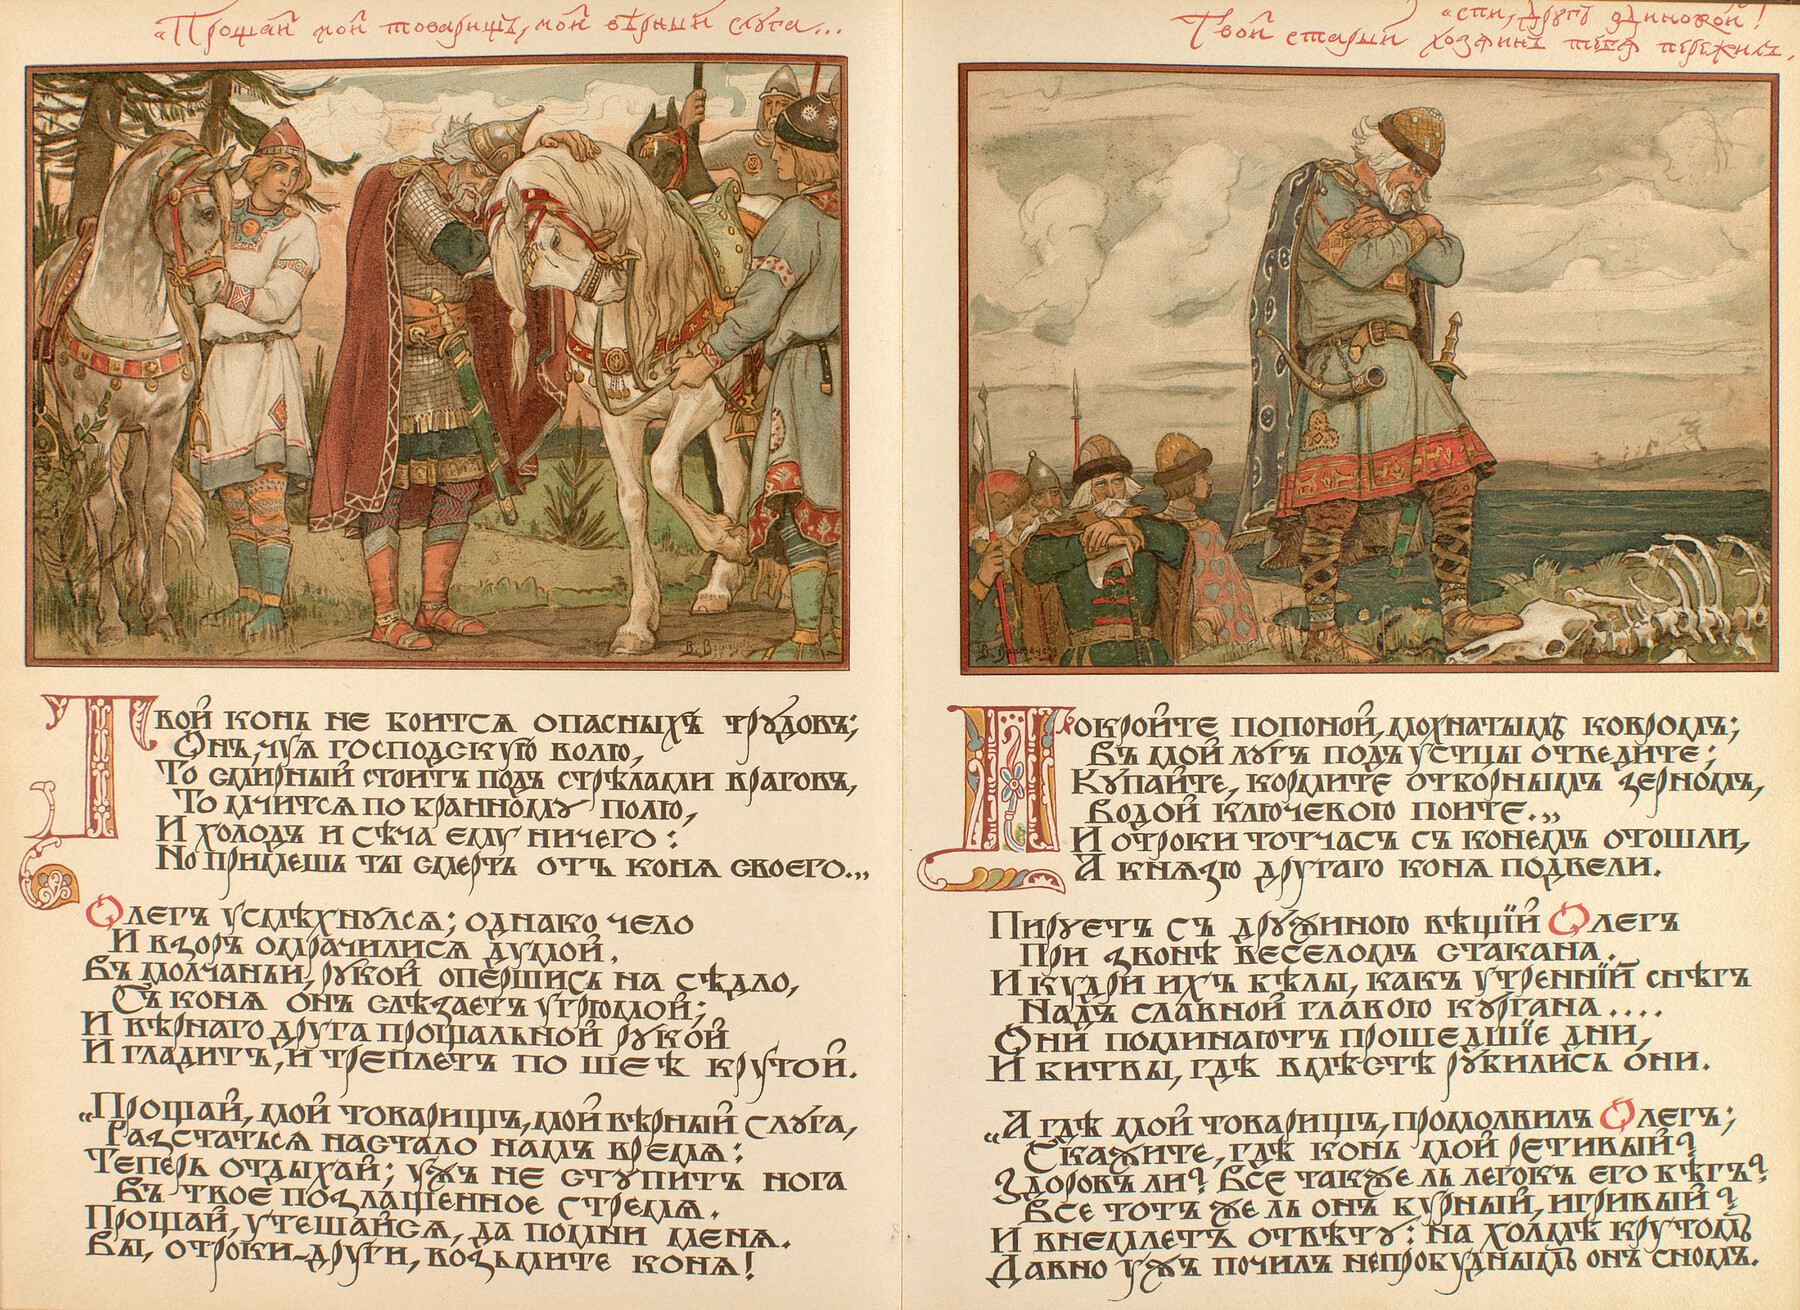 Skazki [Fairy Tales] with illustrations by Ivan Bilibine,
St Petersburg, Ekspeditsia Zagotovlenia Gosudarstvennykh
Bumag, 1901–03, </i>comprising six volumes, chromolithographs
throughout, some of  these full-page;<i>